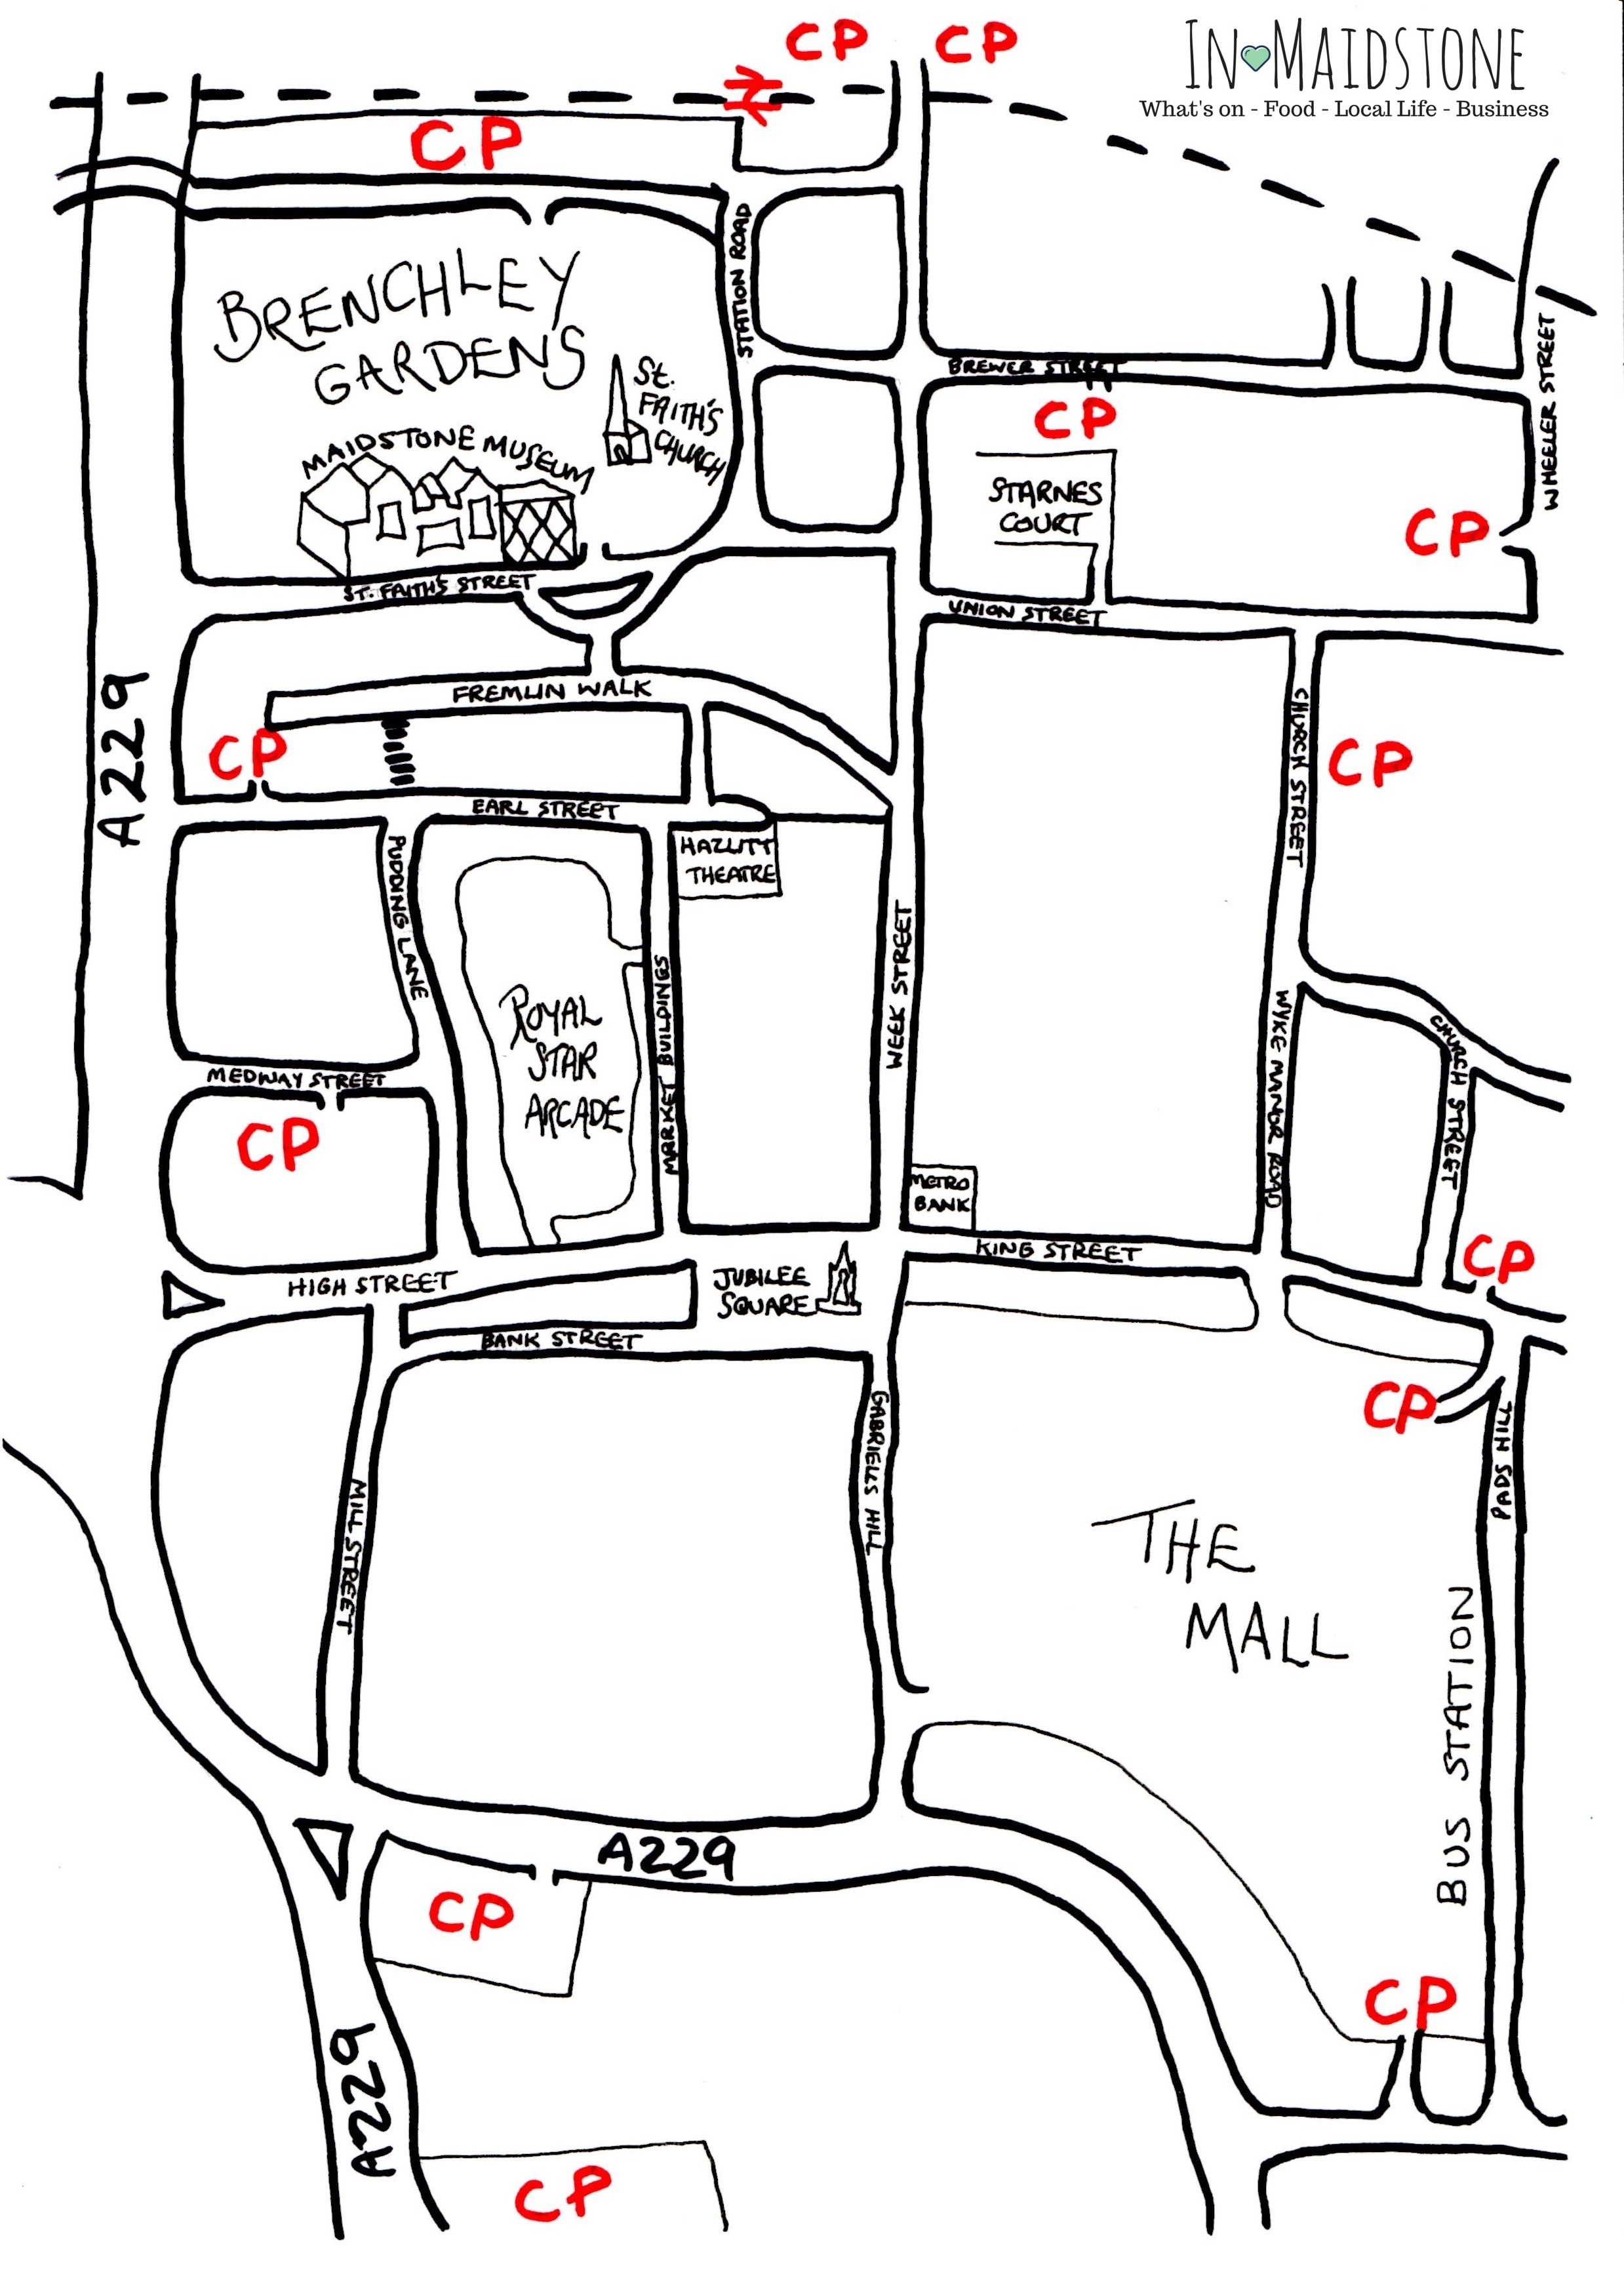 car-park-maidstone-town-centre-map